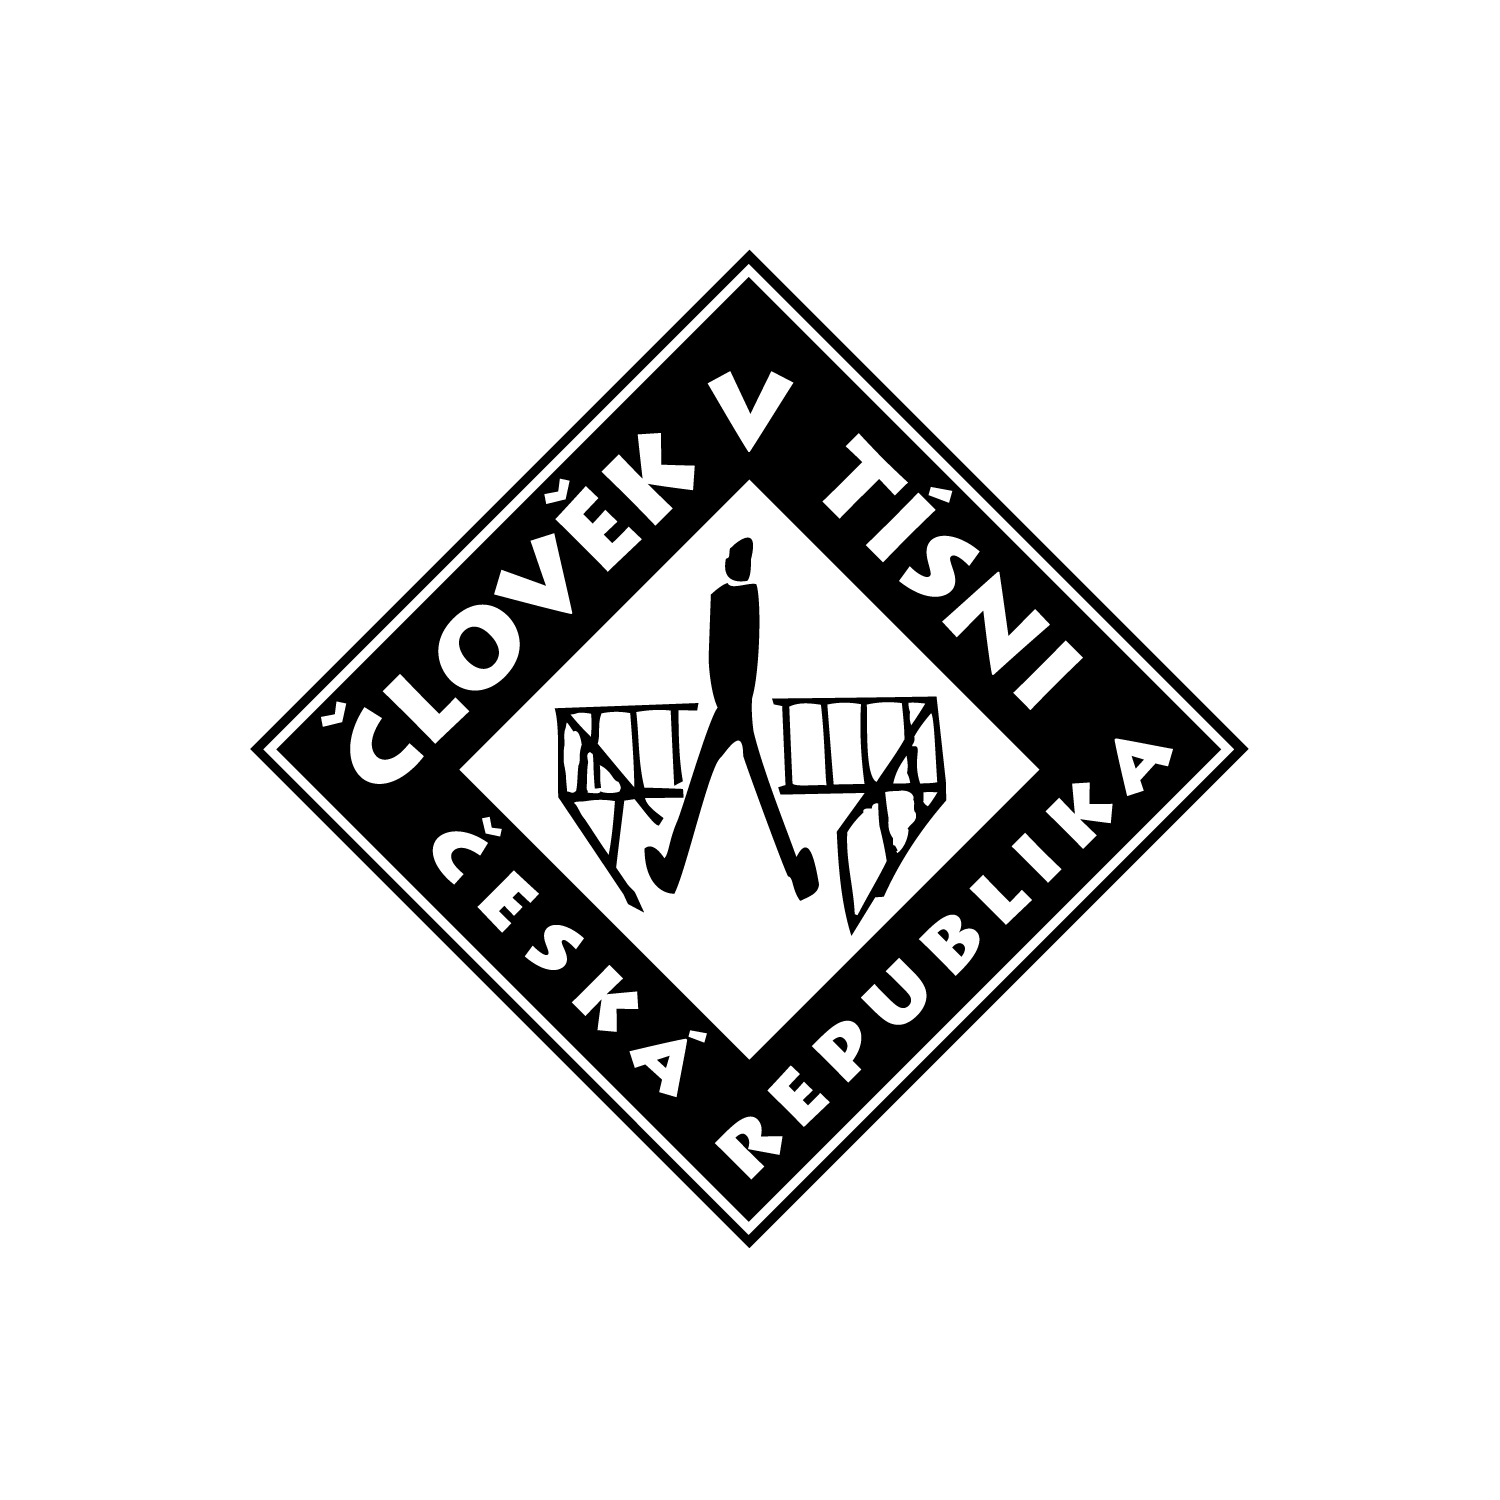 CvT logo cz 1500